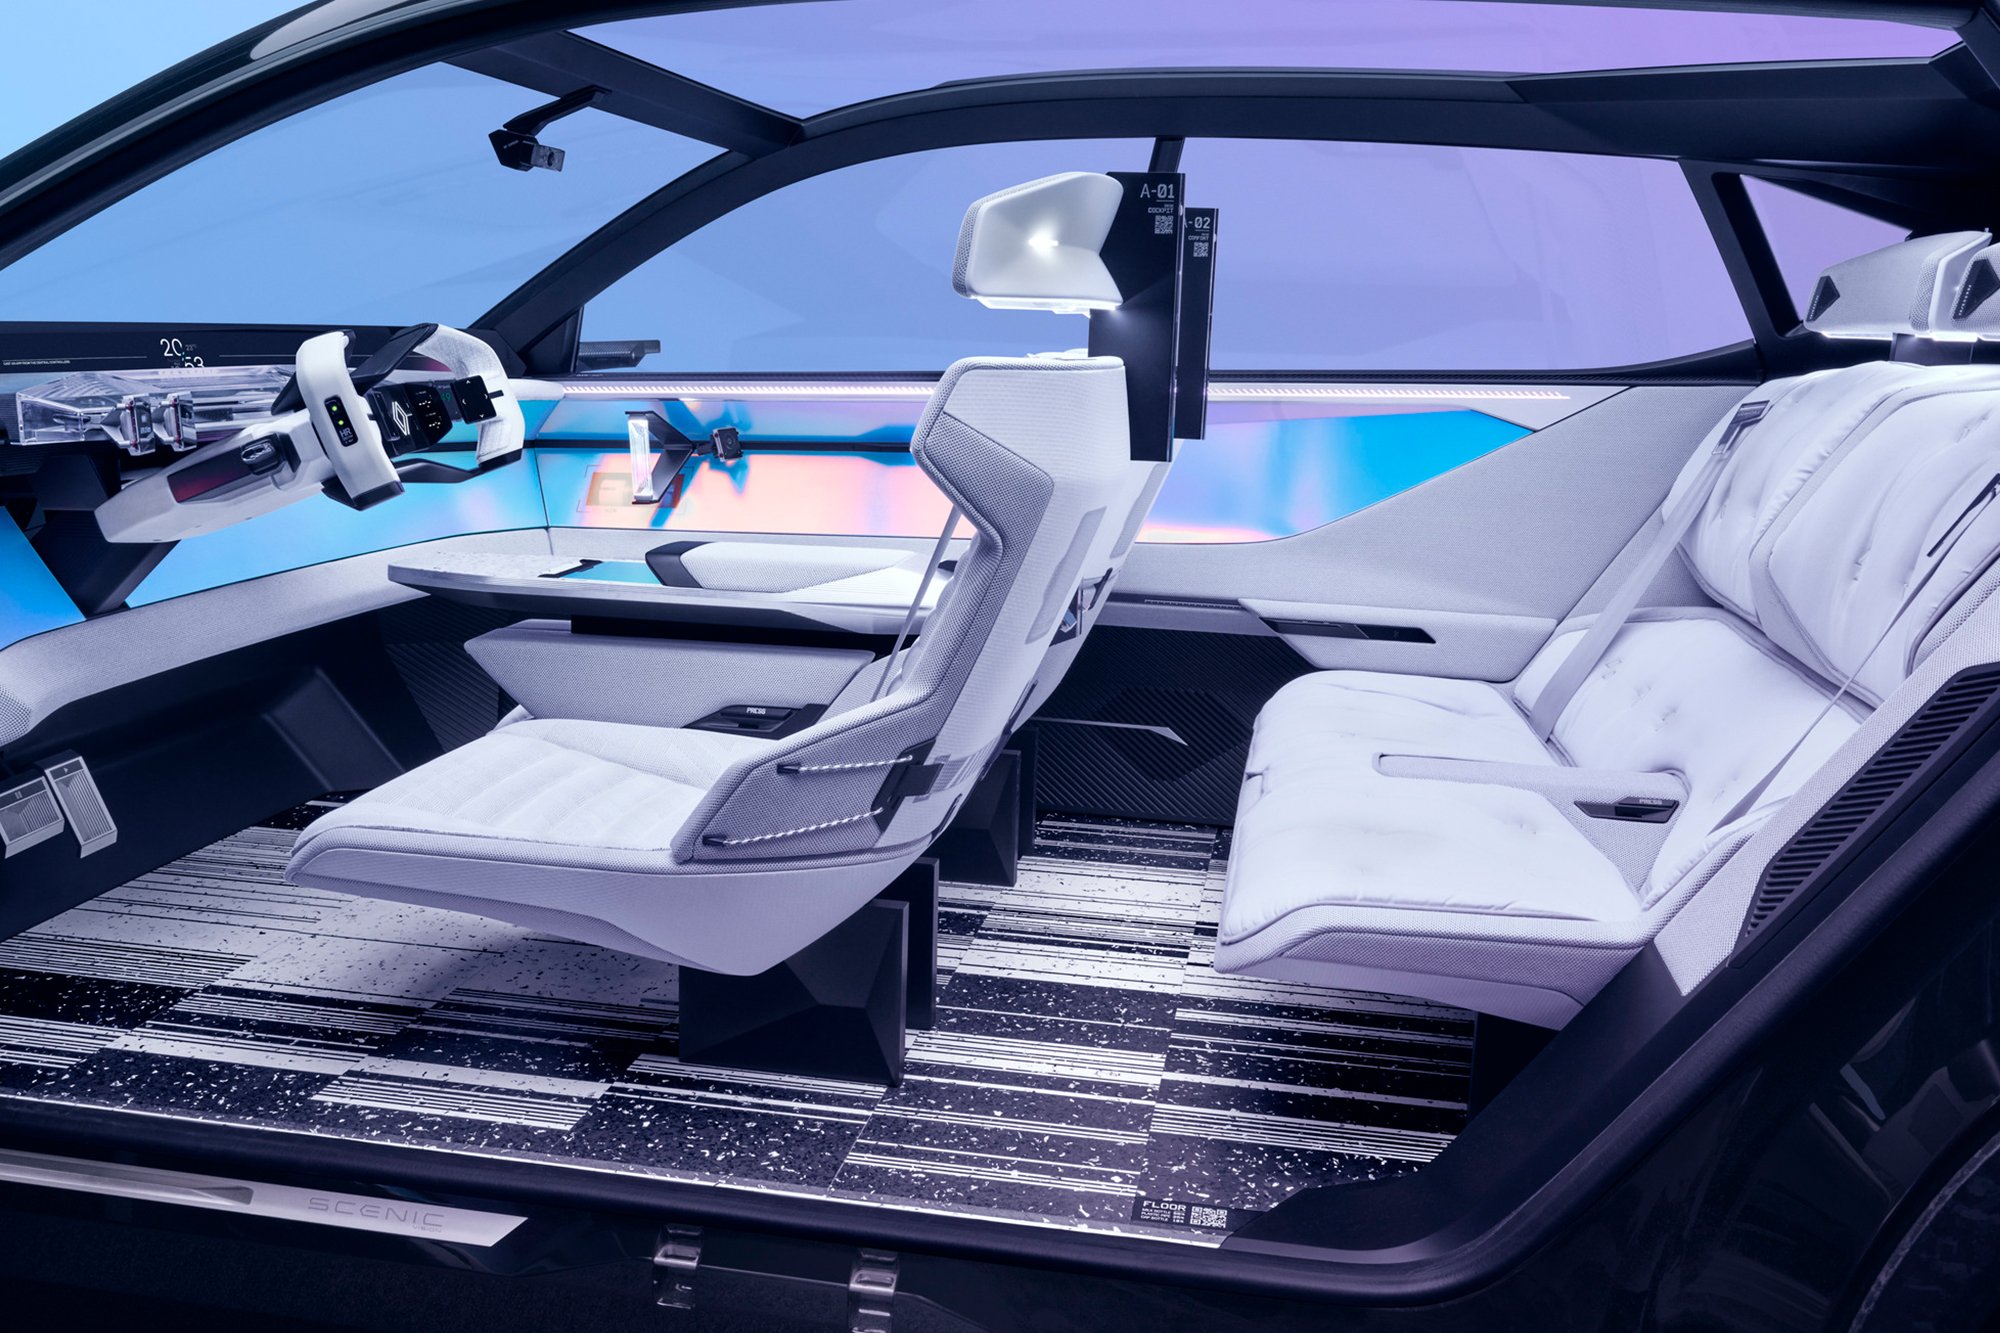 The interior design of the Renault Scenic Vision